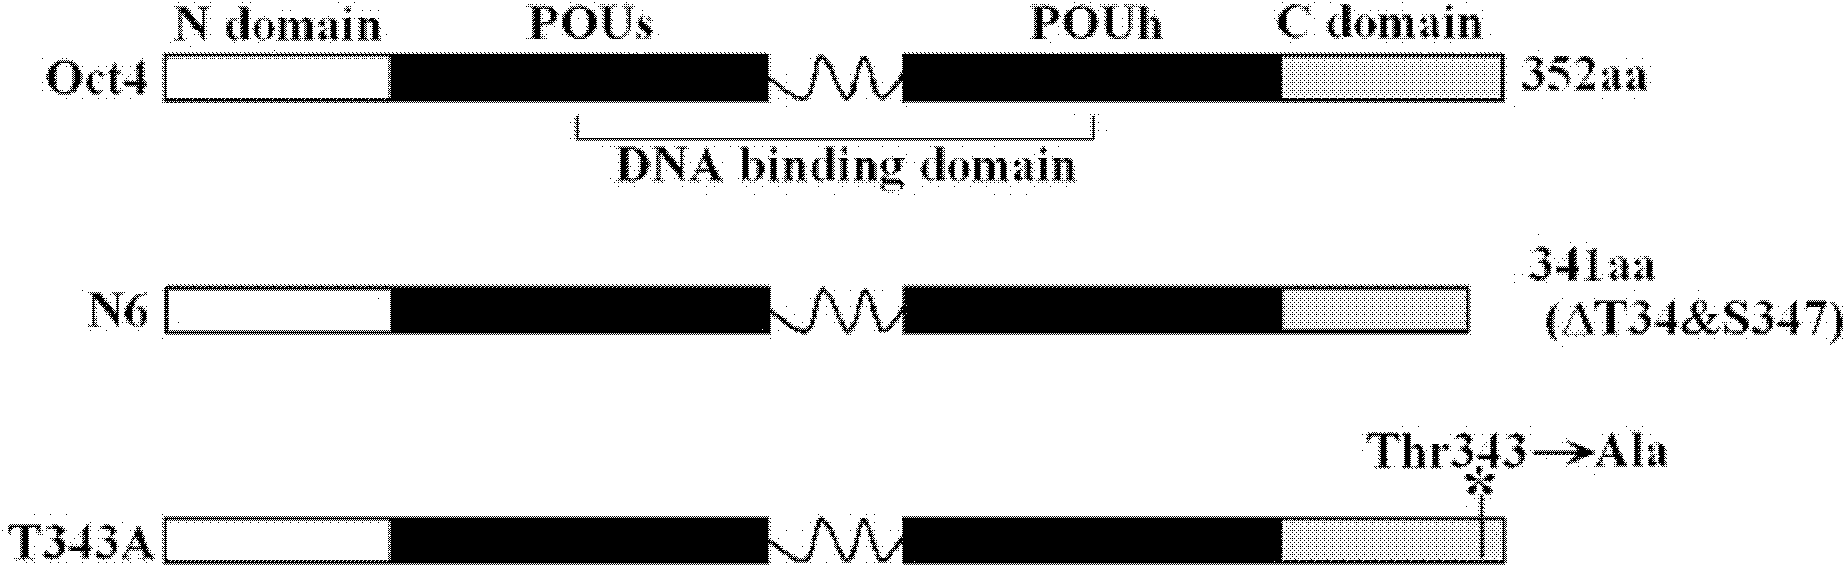 Anti-phosphorylation Oct4 protein antibody and its application